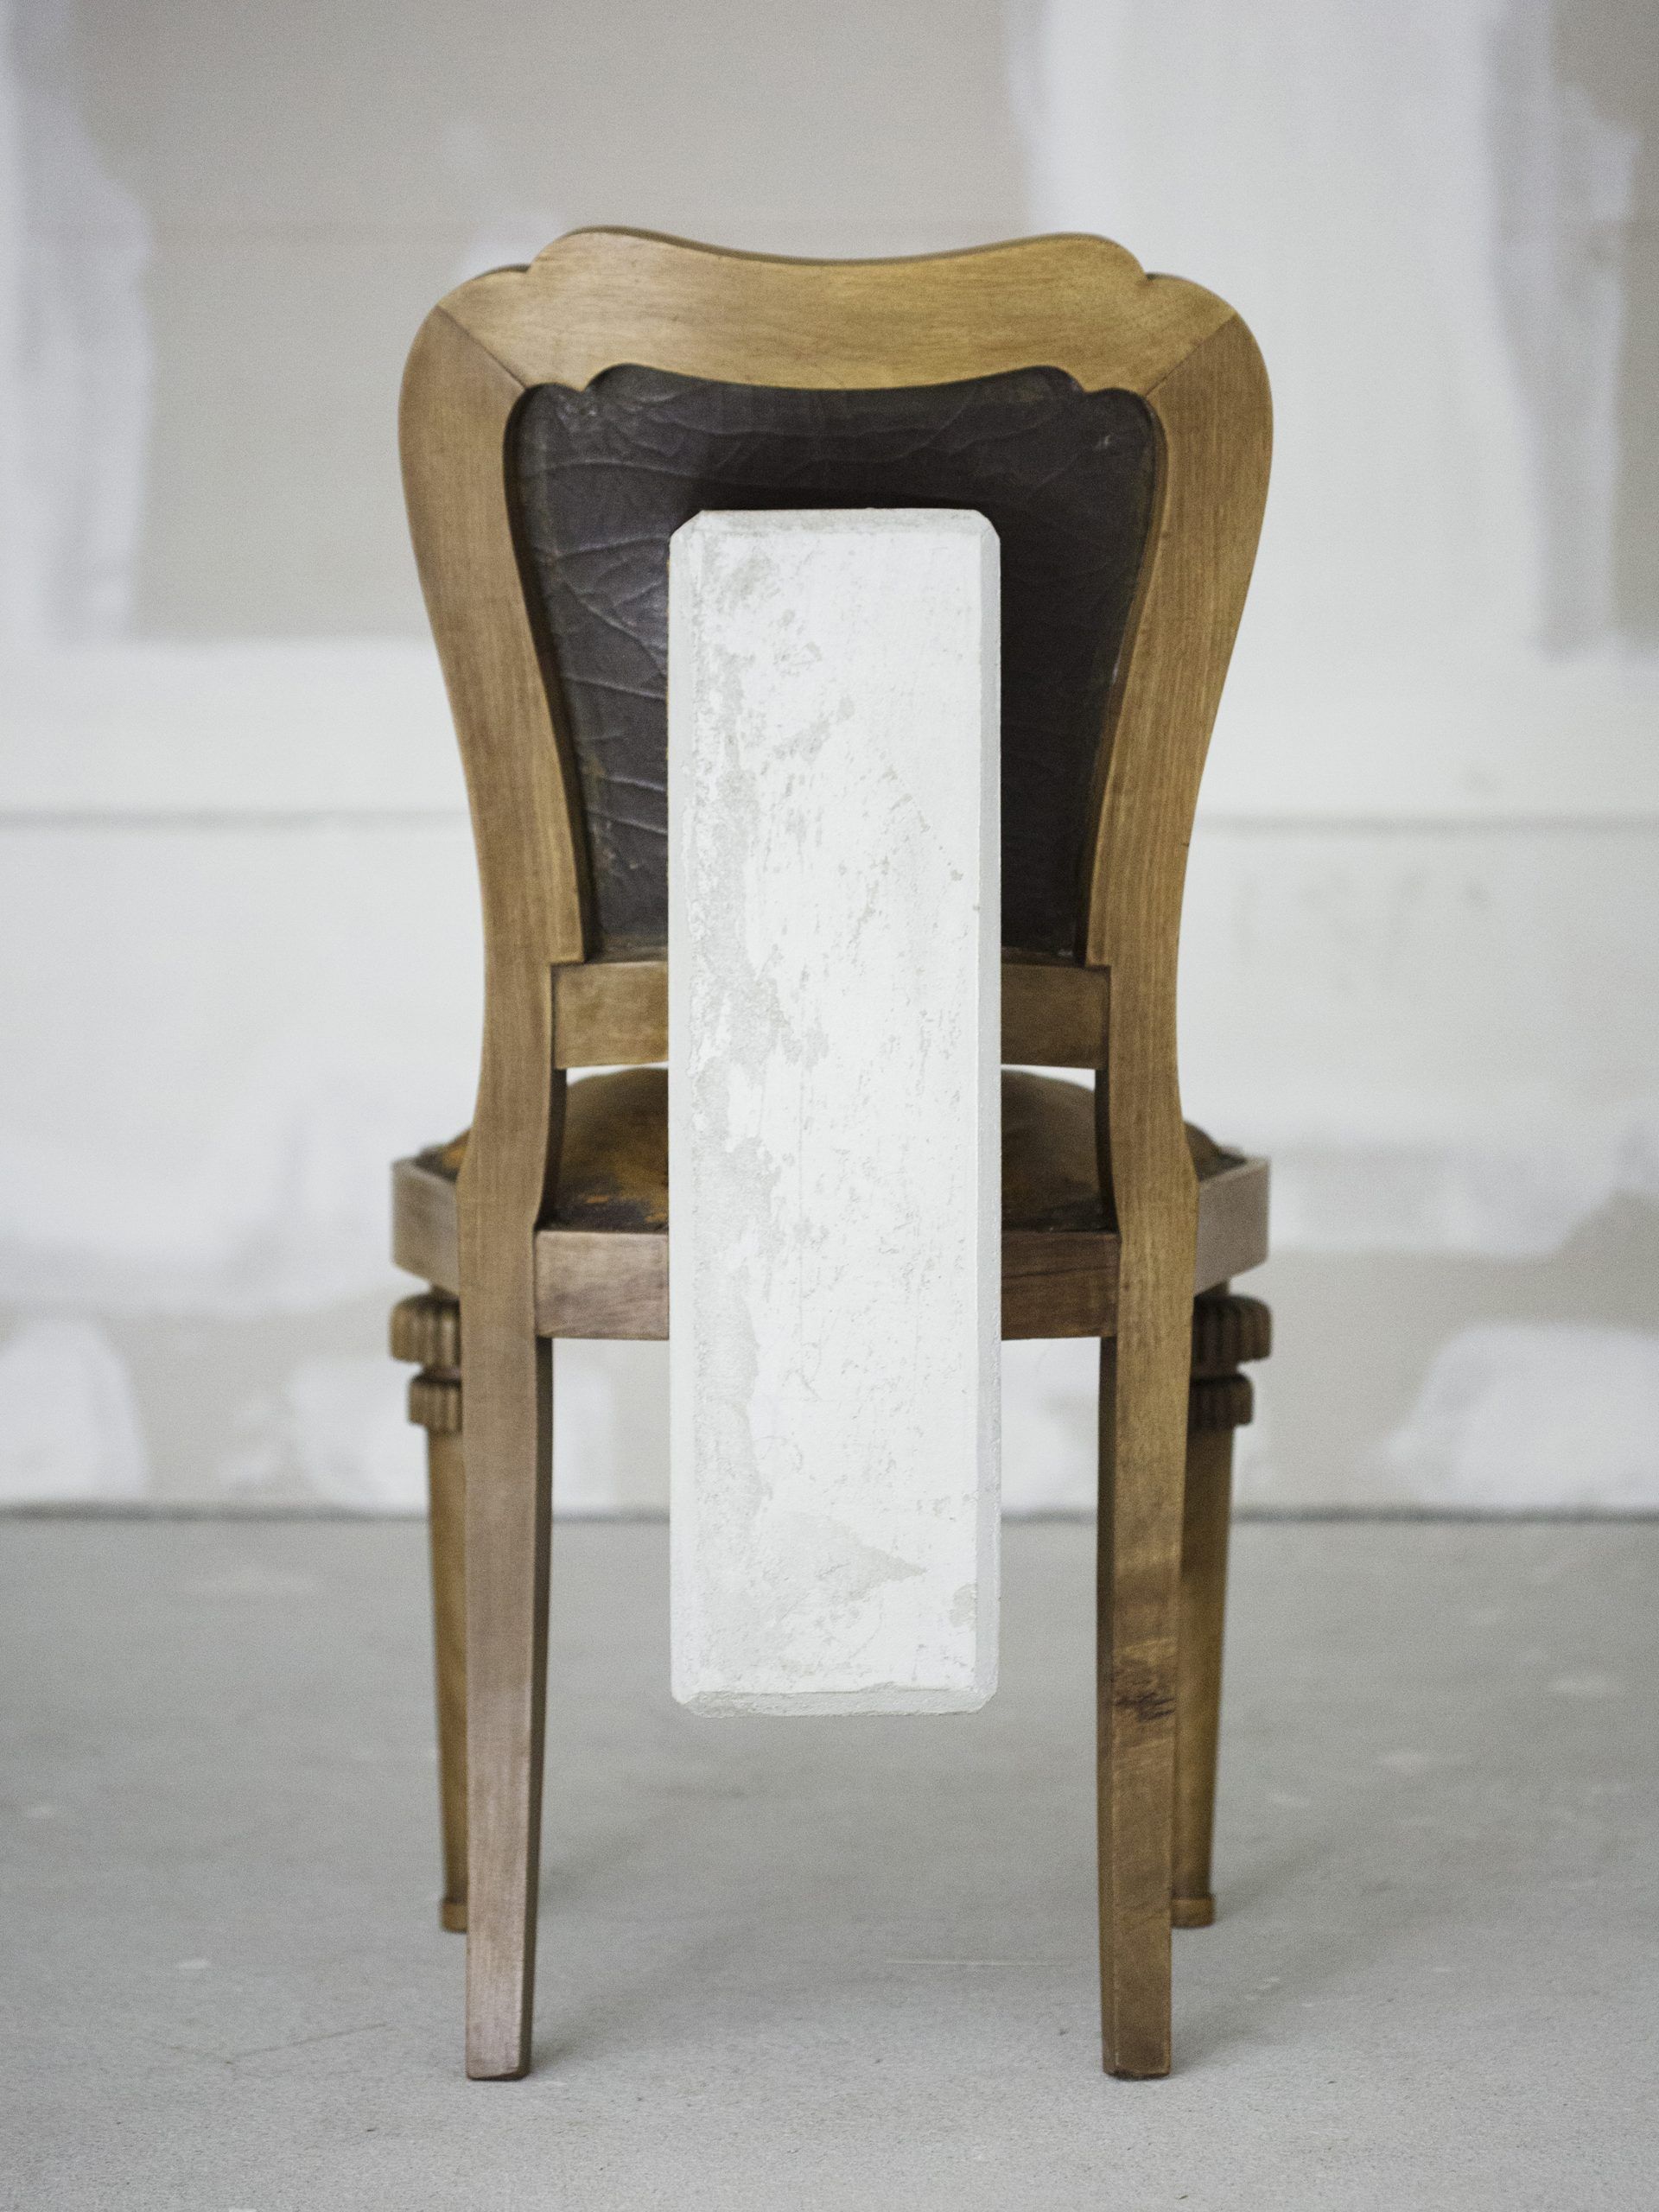 © Studio Nucelo Boolean and Chair courtesy ammann gallery